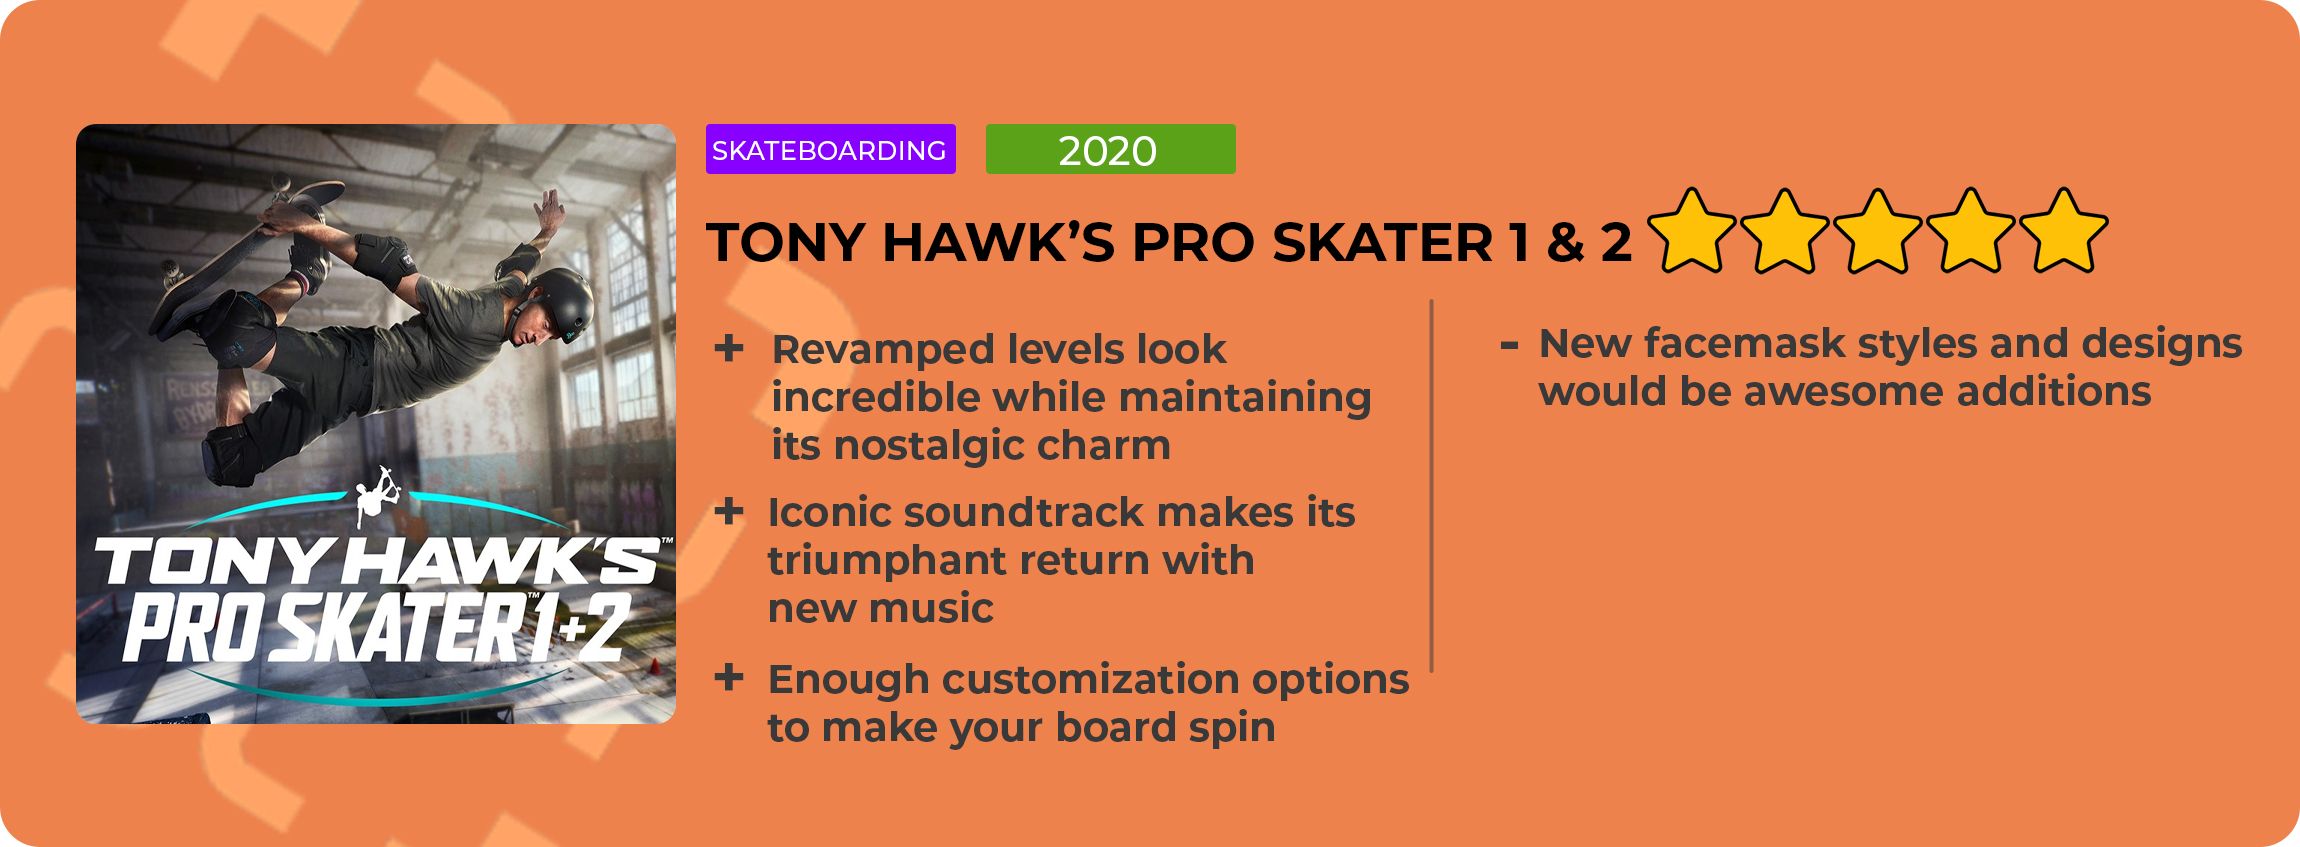 Tony Hawk’s Pro Skater 1 & 2 Review Superman Returns